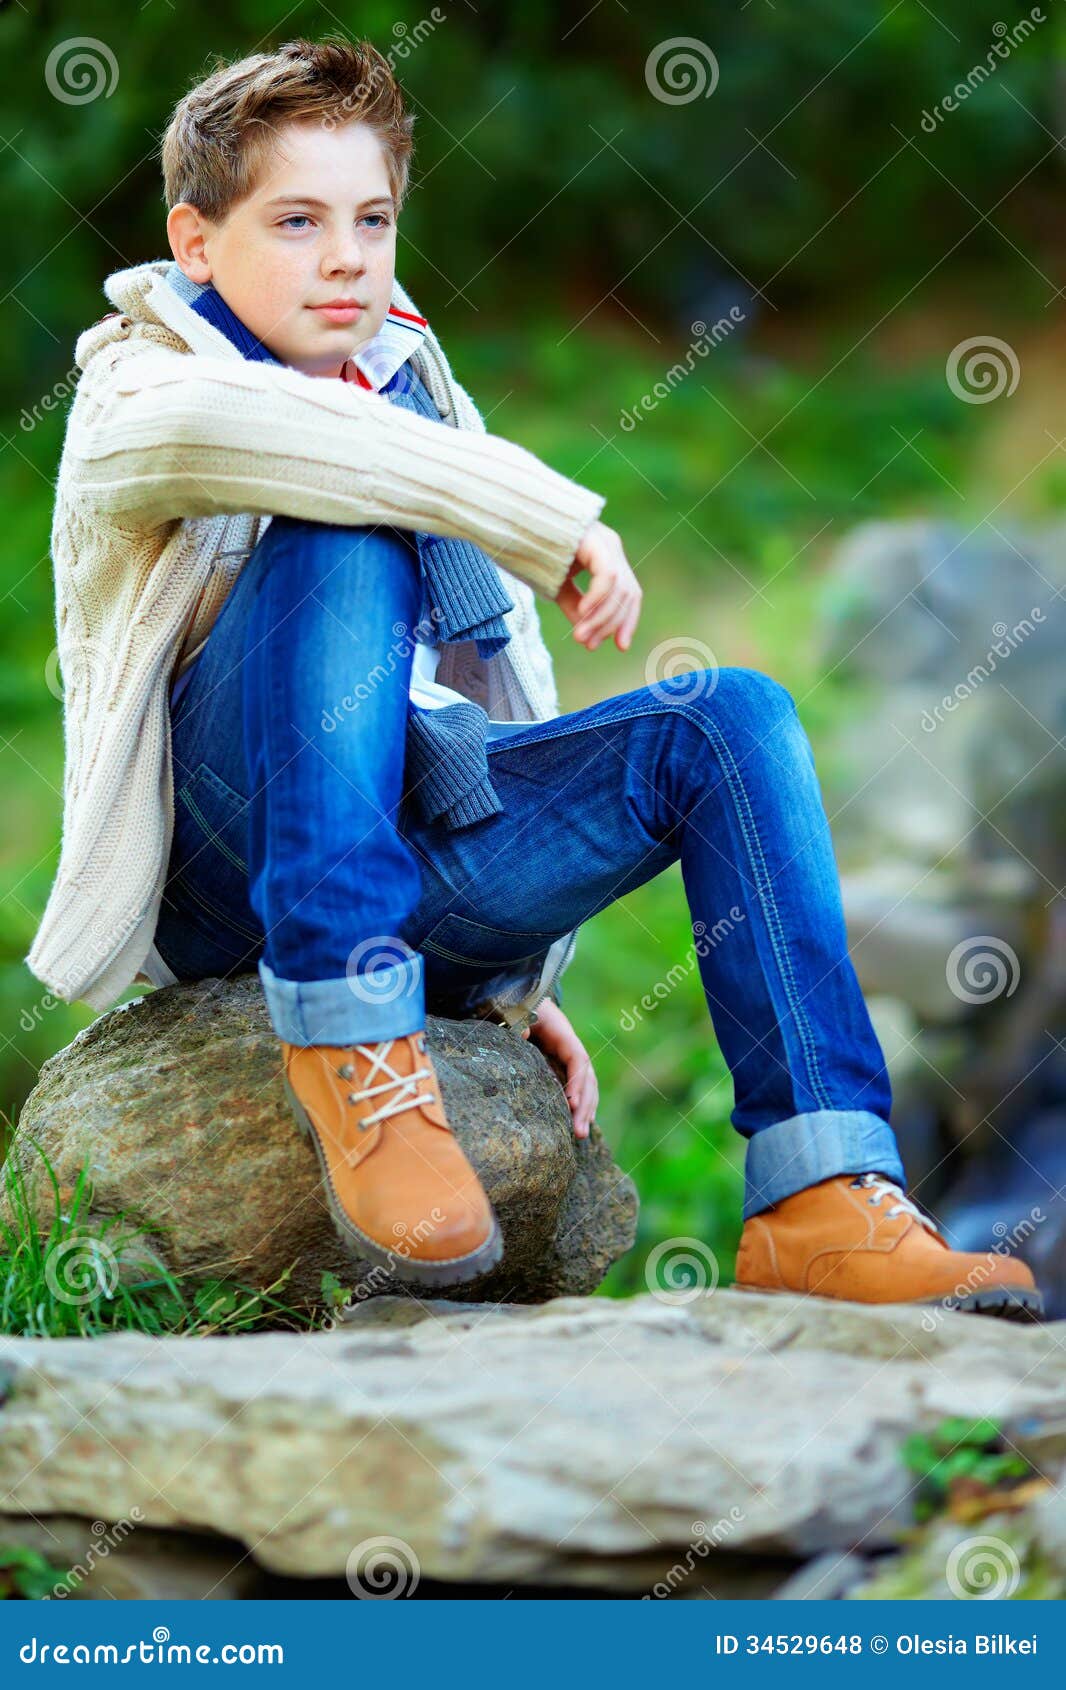 Fashionable Teenage Boy, Colorful Outdoors Stock Photo - Image of ...